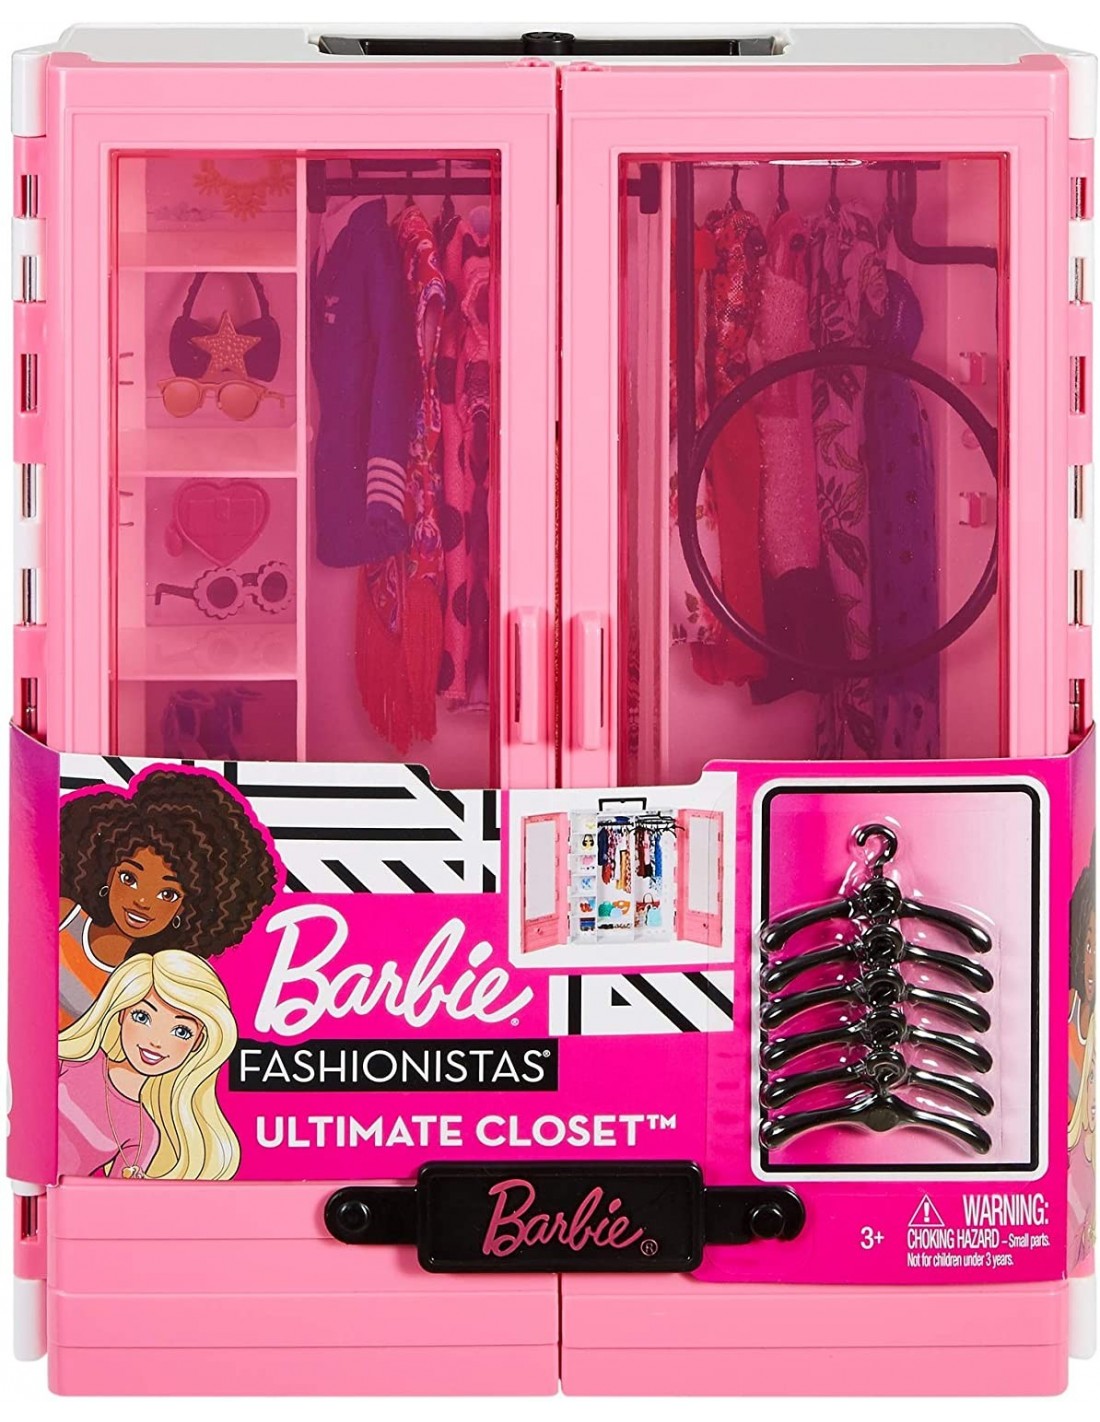 Barbie fashionistas ultimate closet ντουλάπα gbk11